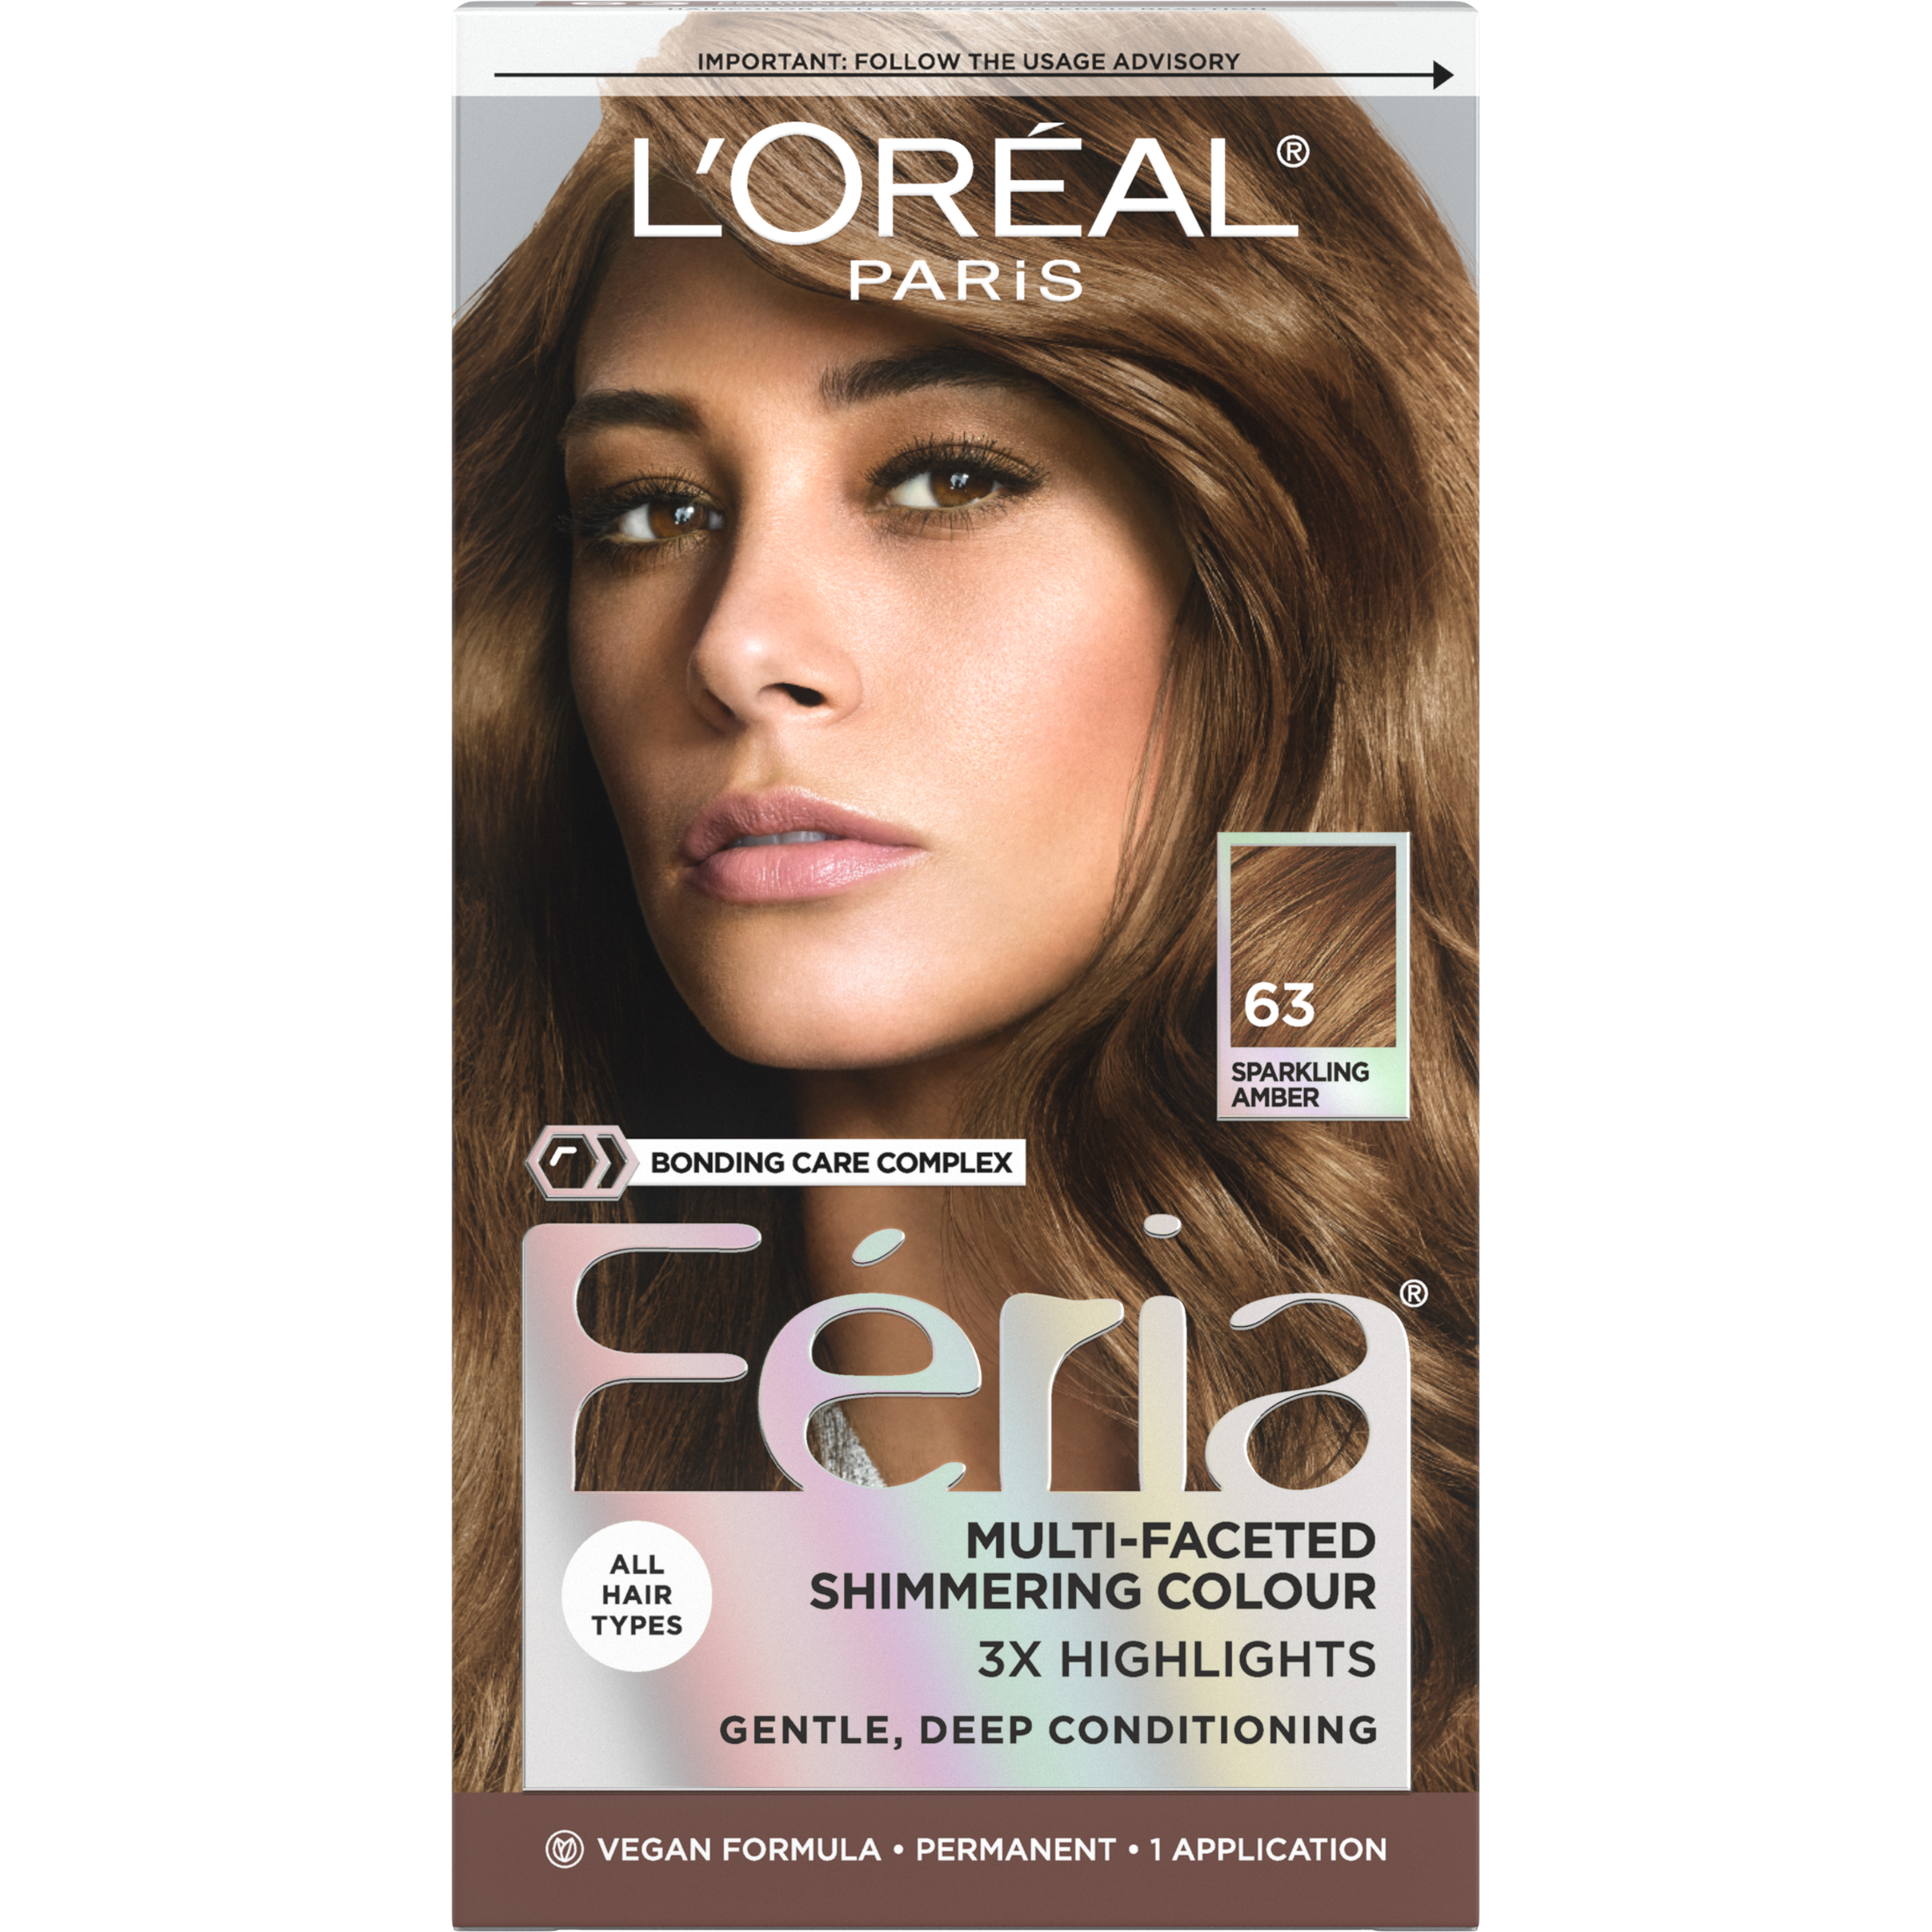 L'Oreal Paris Feria Permanent Hair Color, 63 Sparkling Amber Light Golden Brown - image 1 of 9